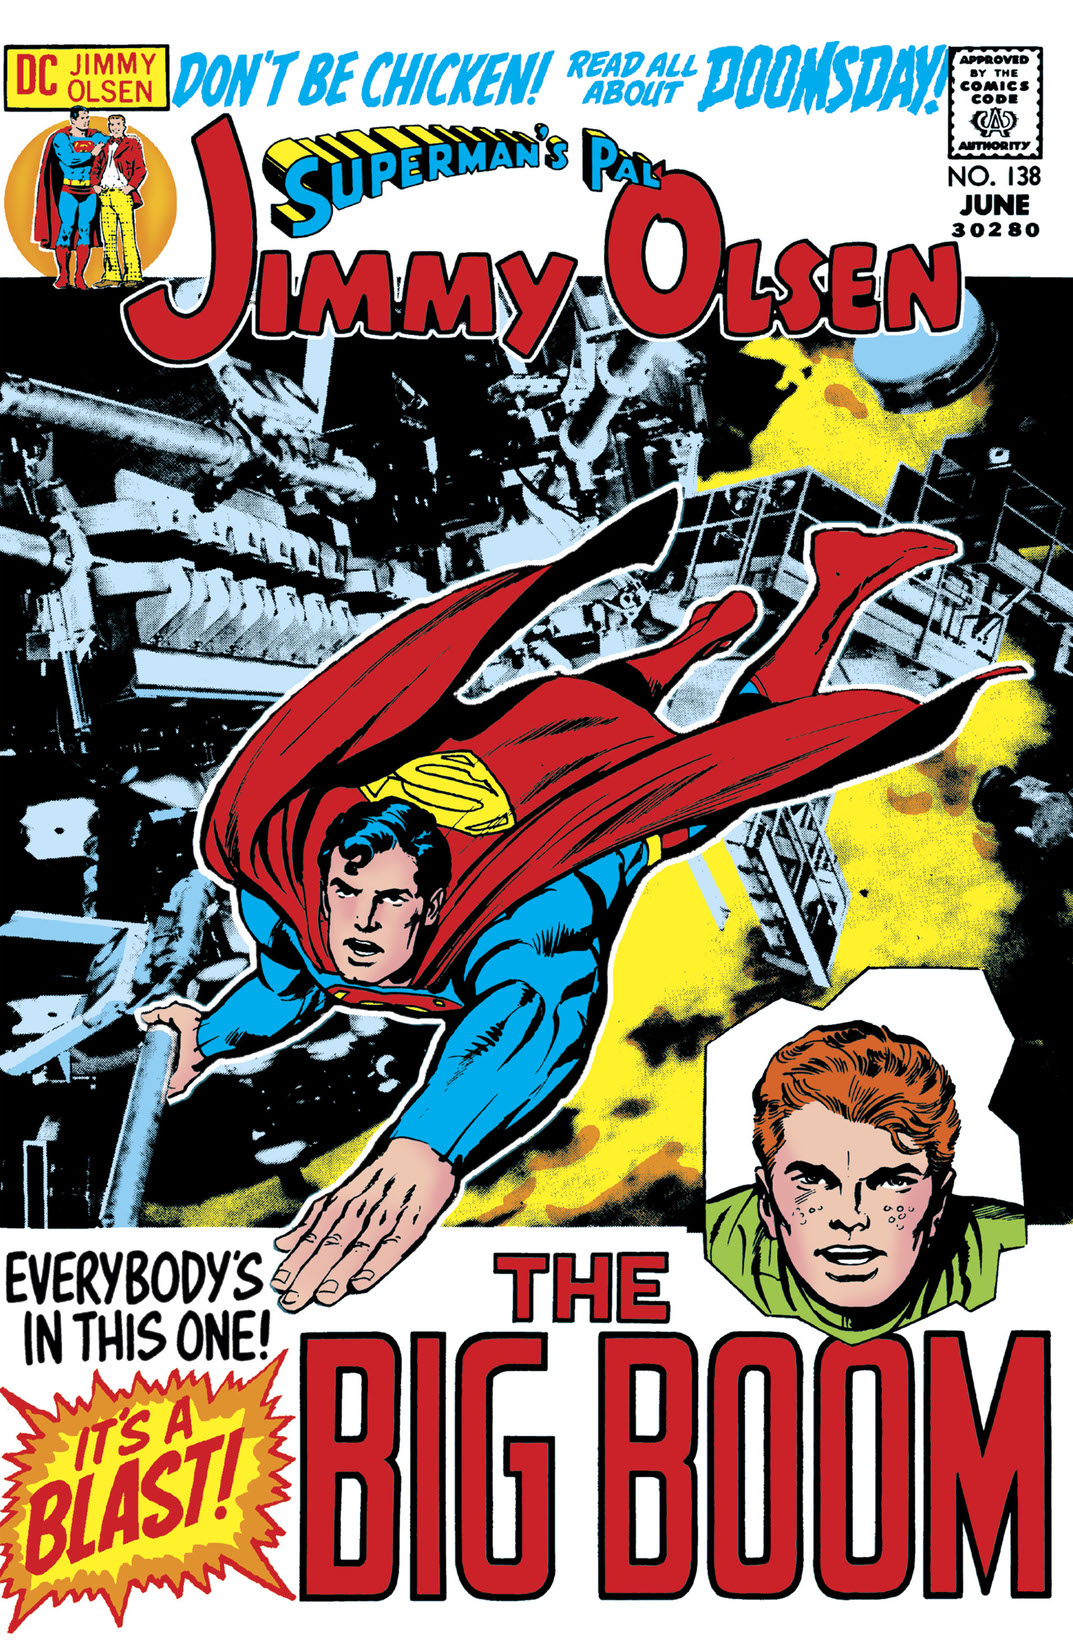 Superman's Pal, Jimmy Olsen #138 preview images